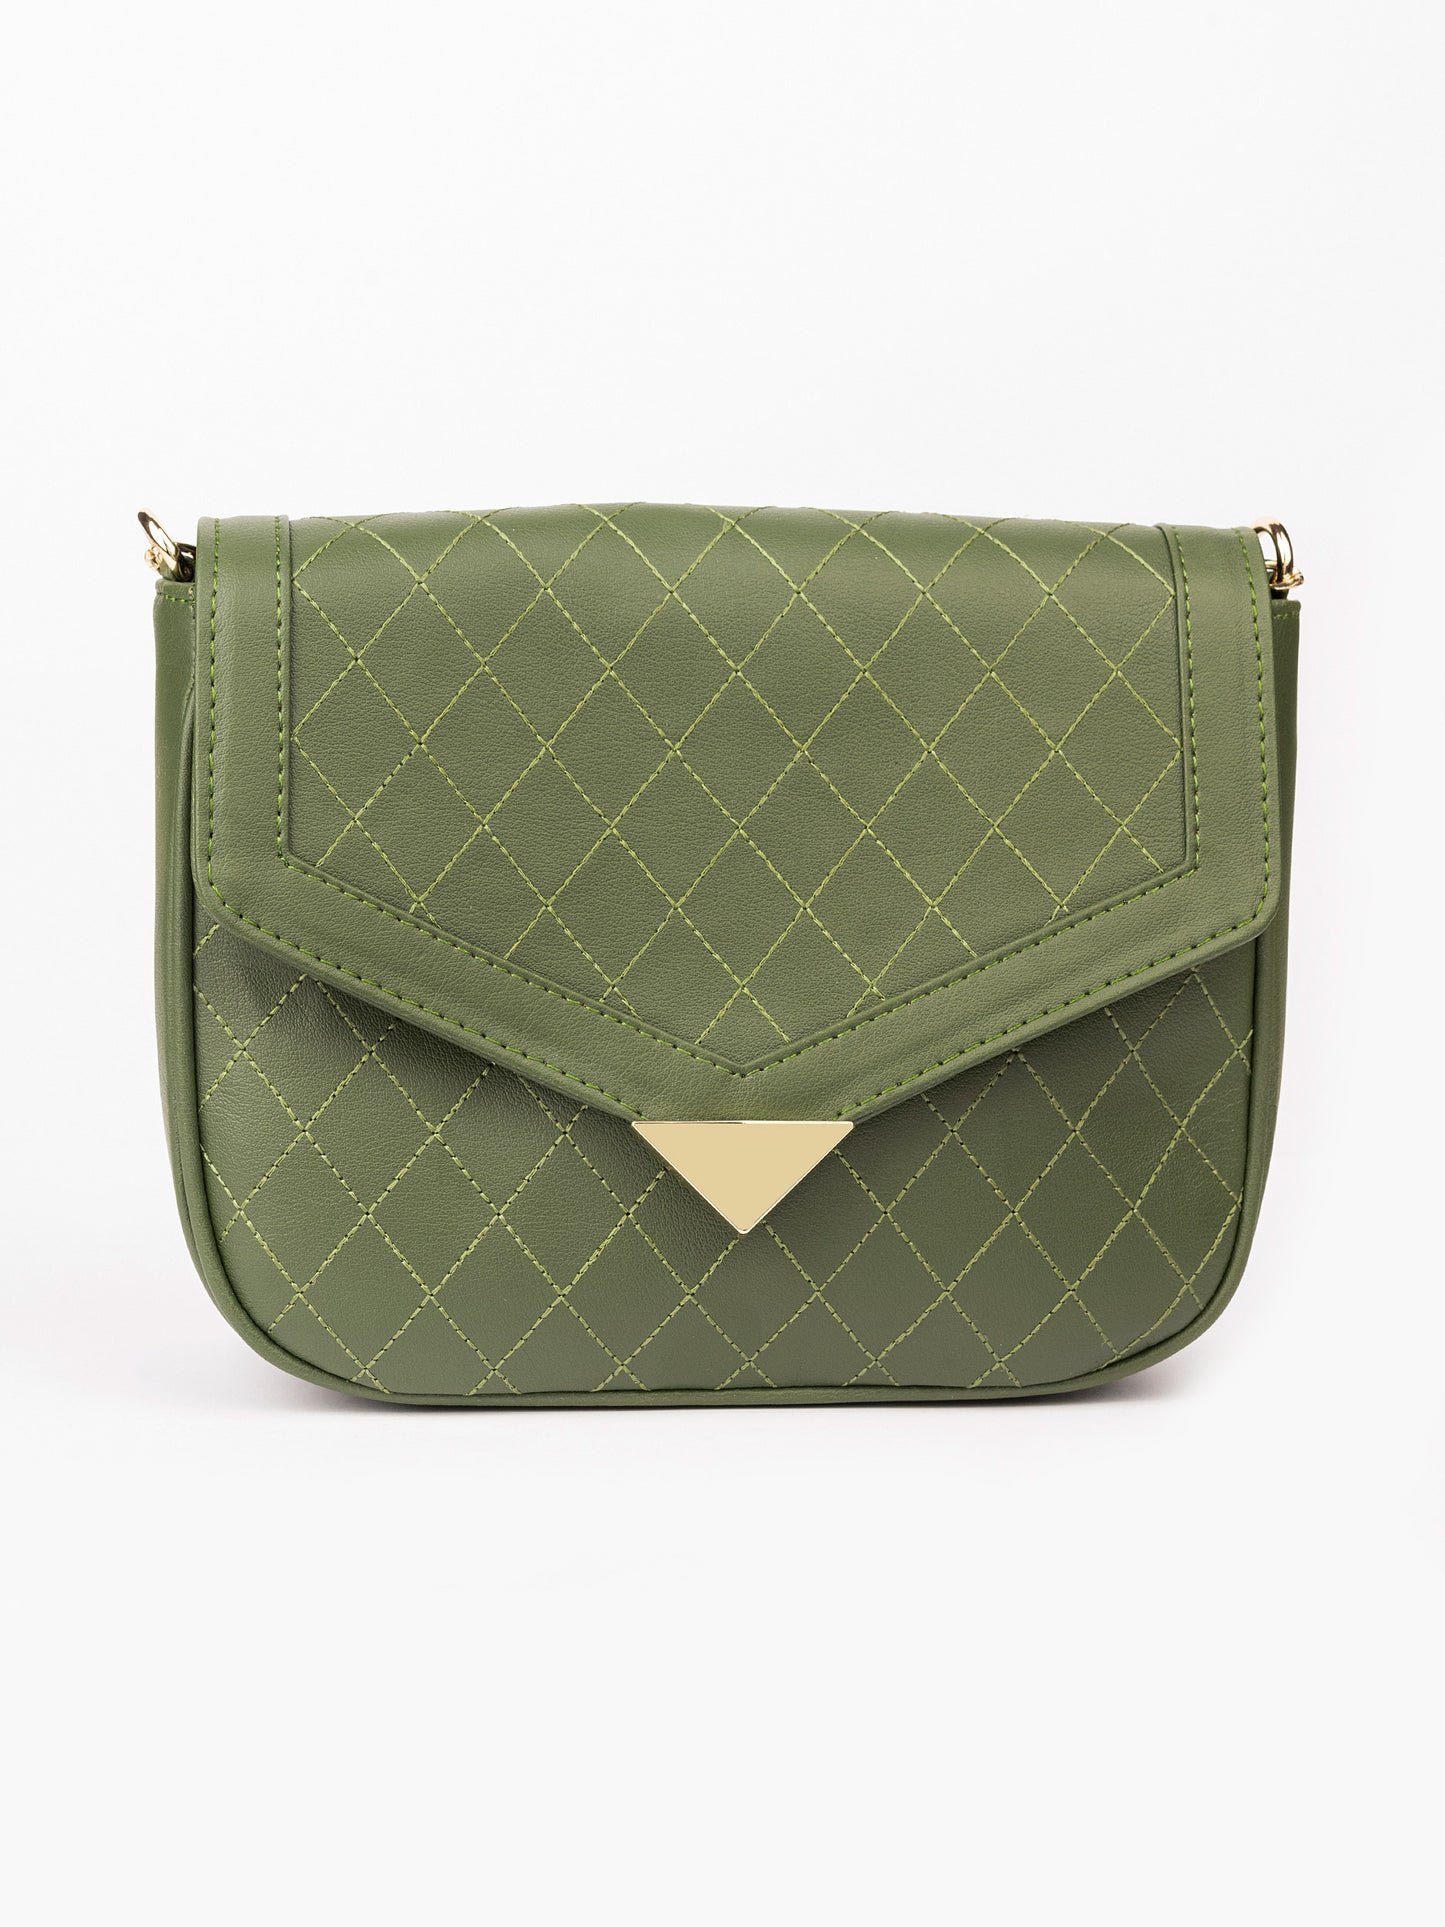 Stitch Pattern Handbag